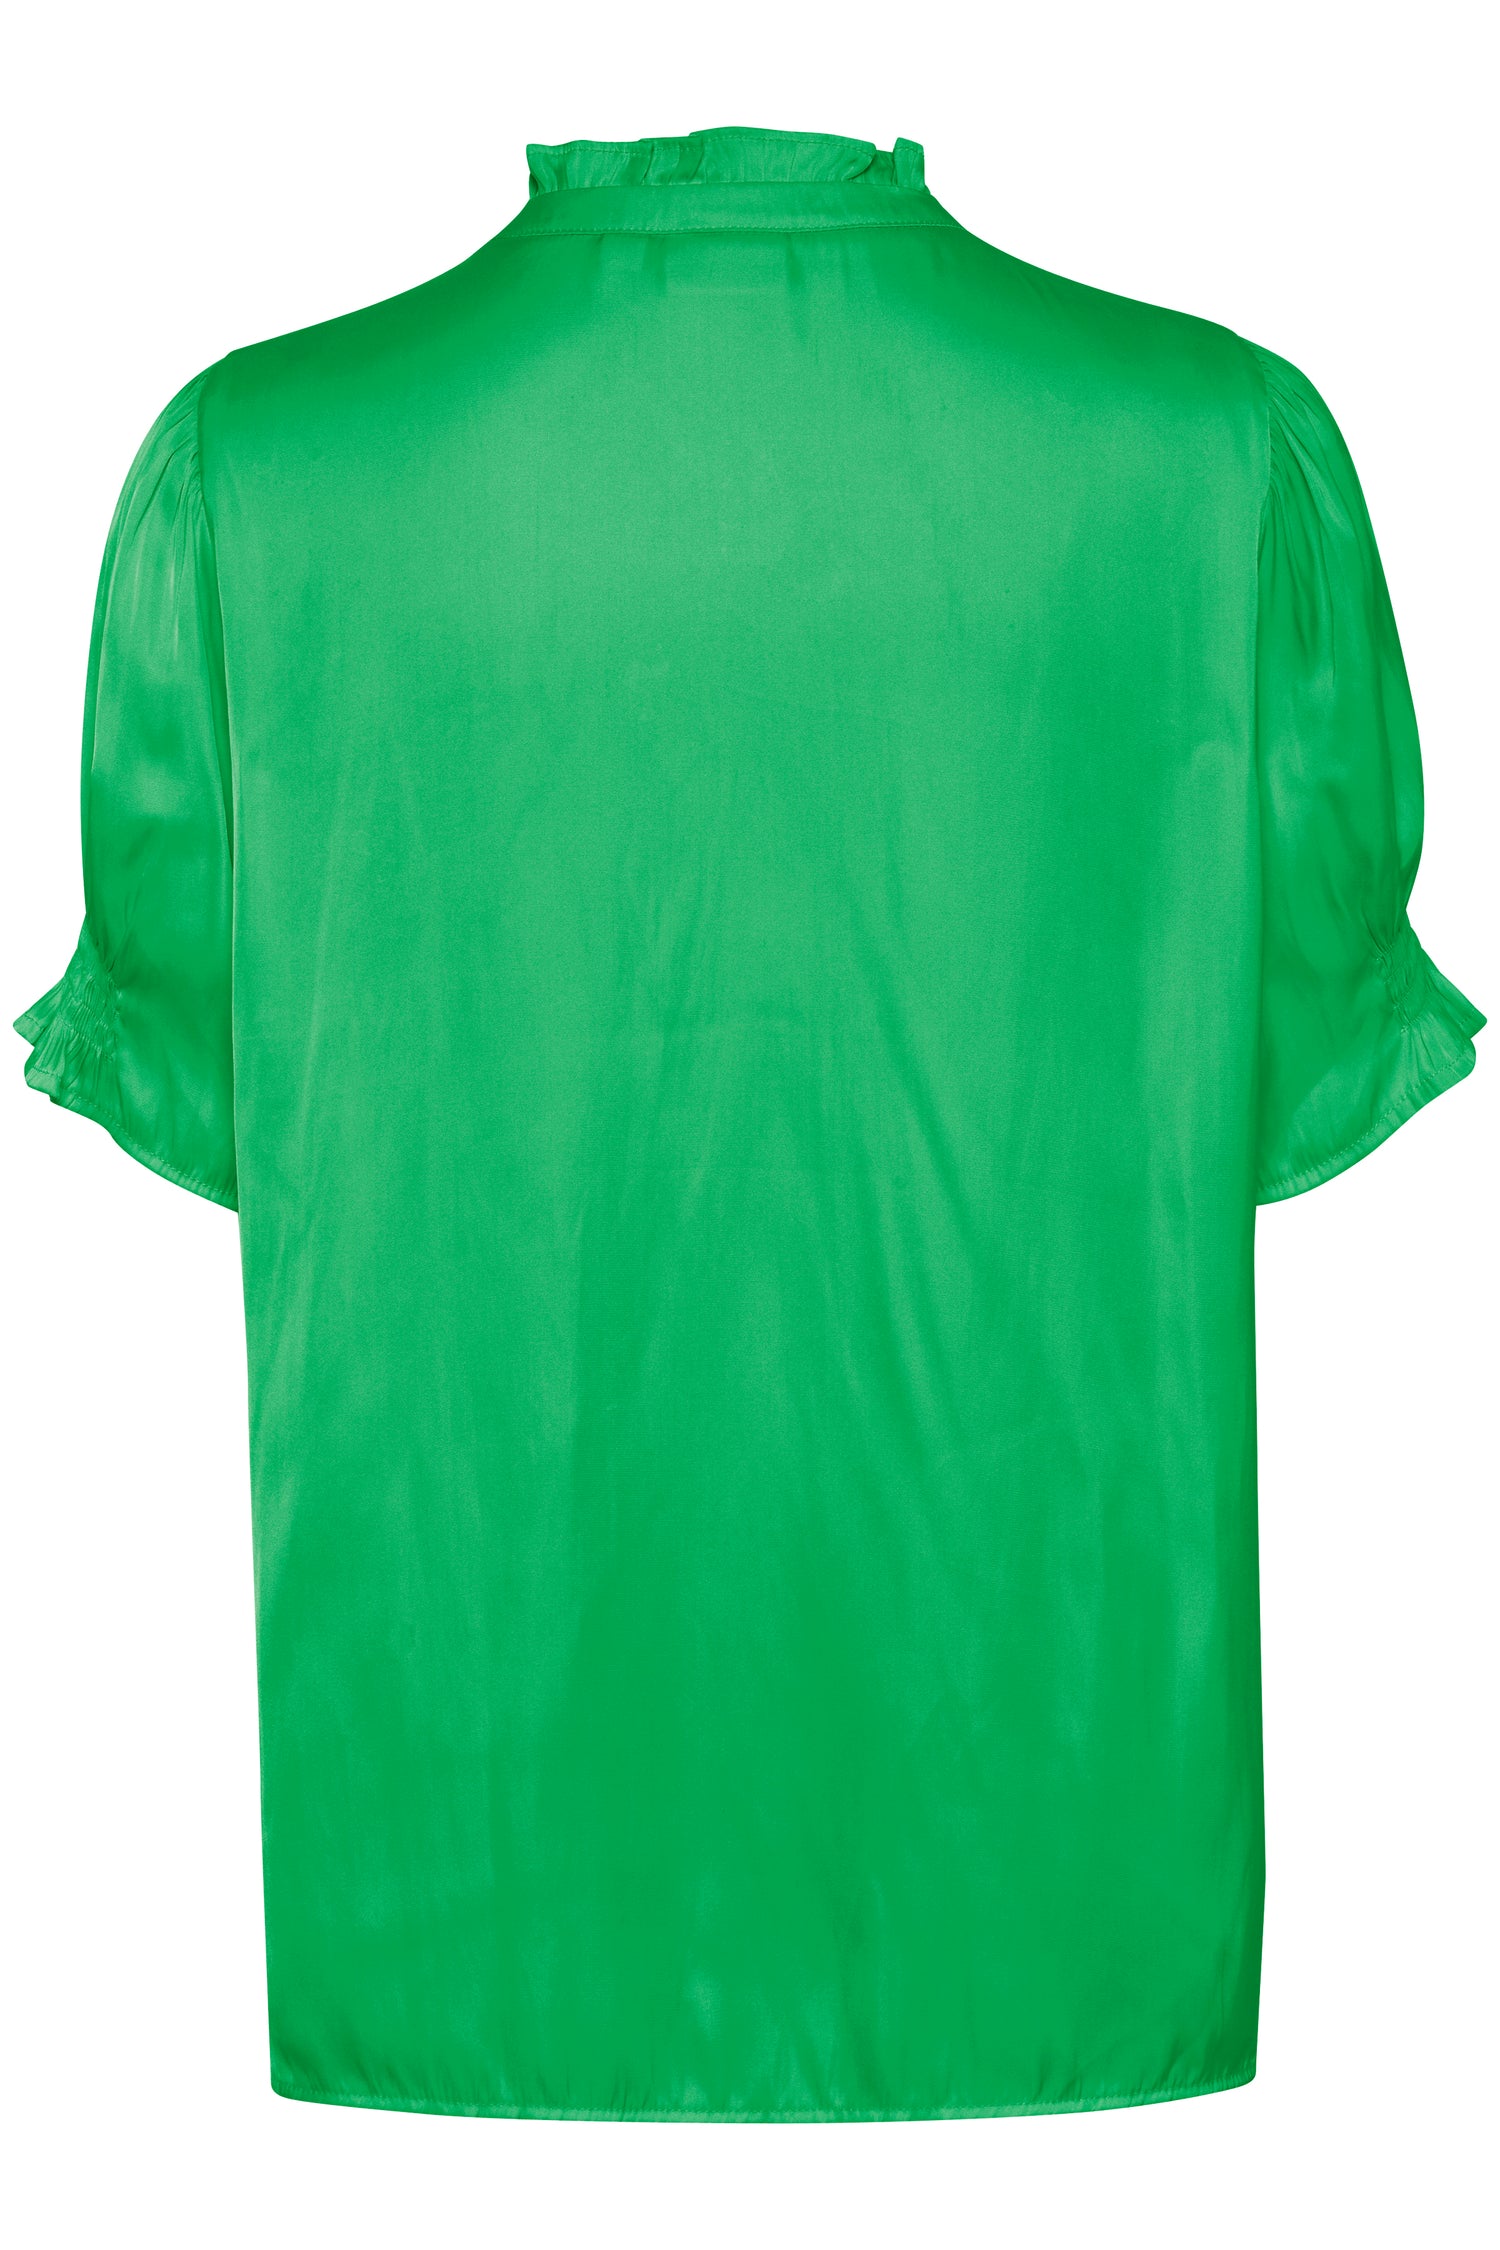 Saint Tropez Veeni Shirt in Bright Green